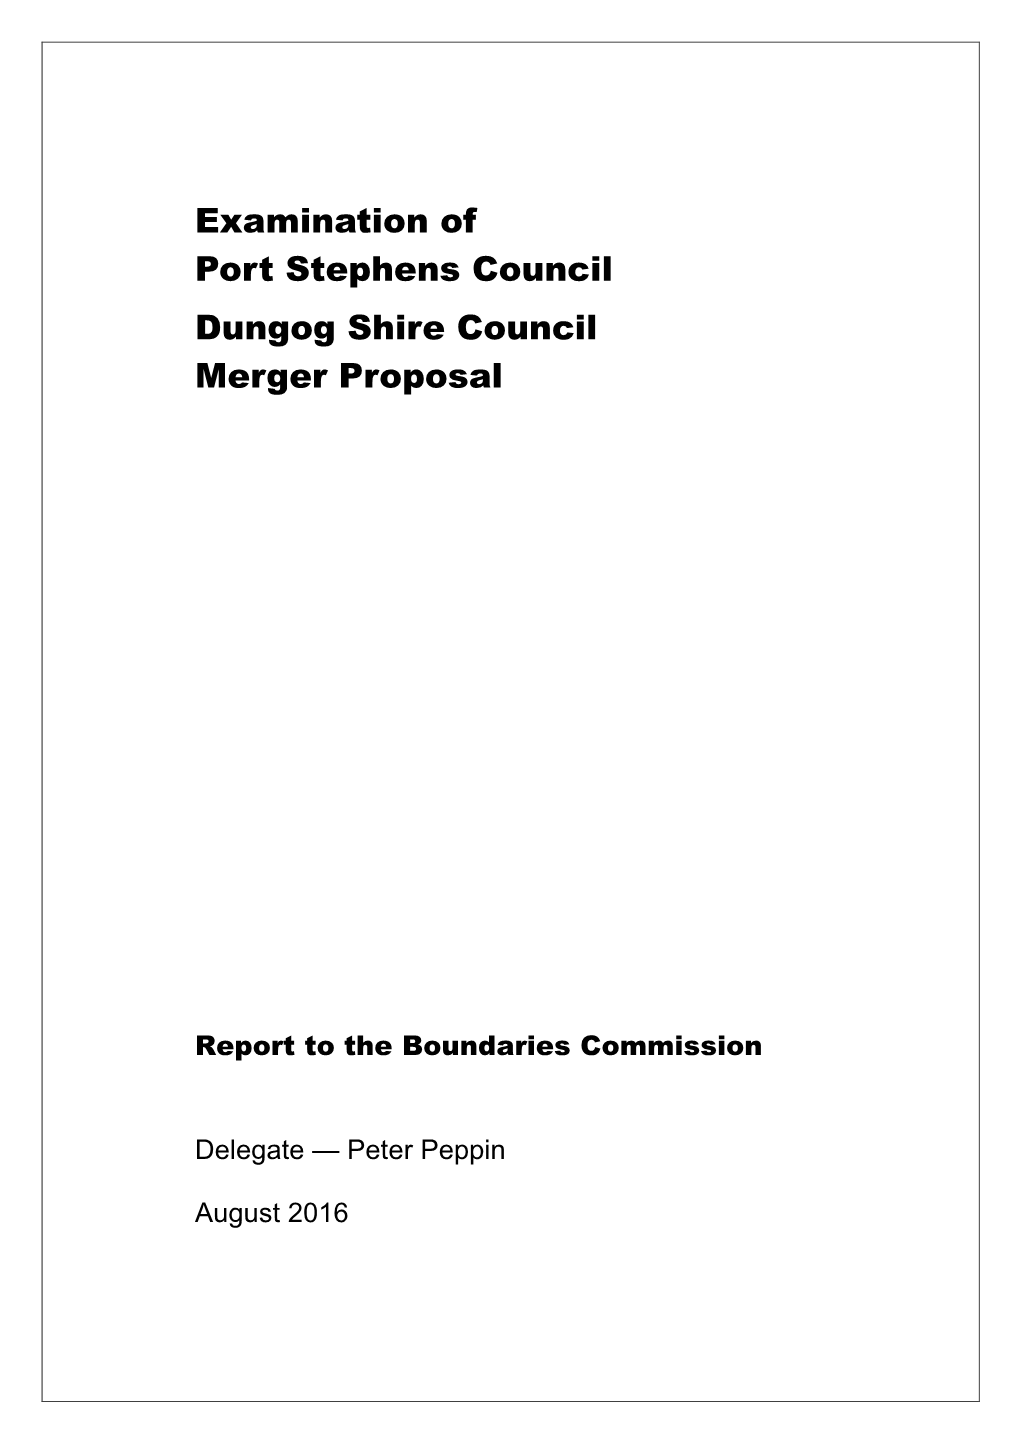 Dungog Shire Council Merger Proposal